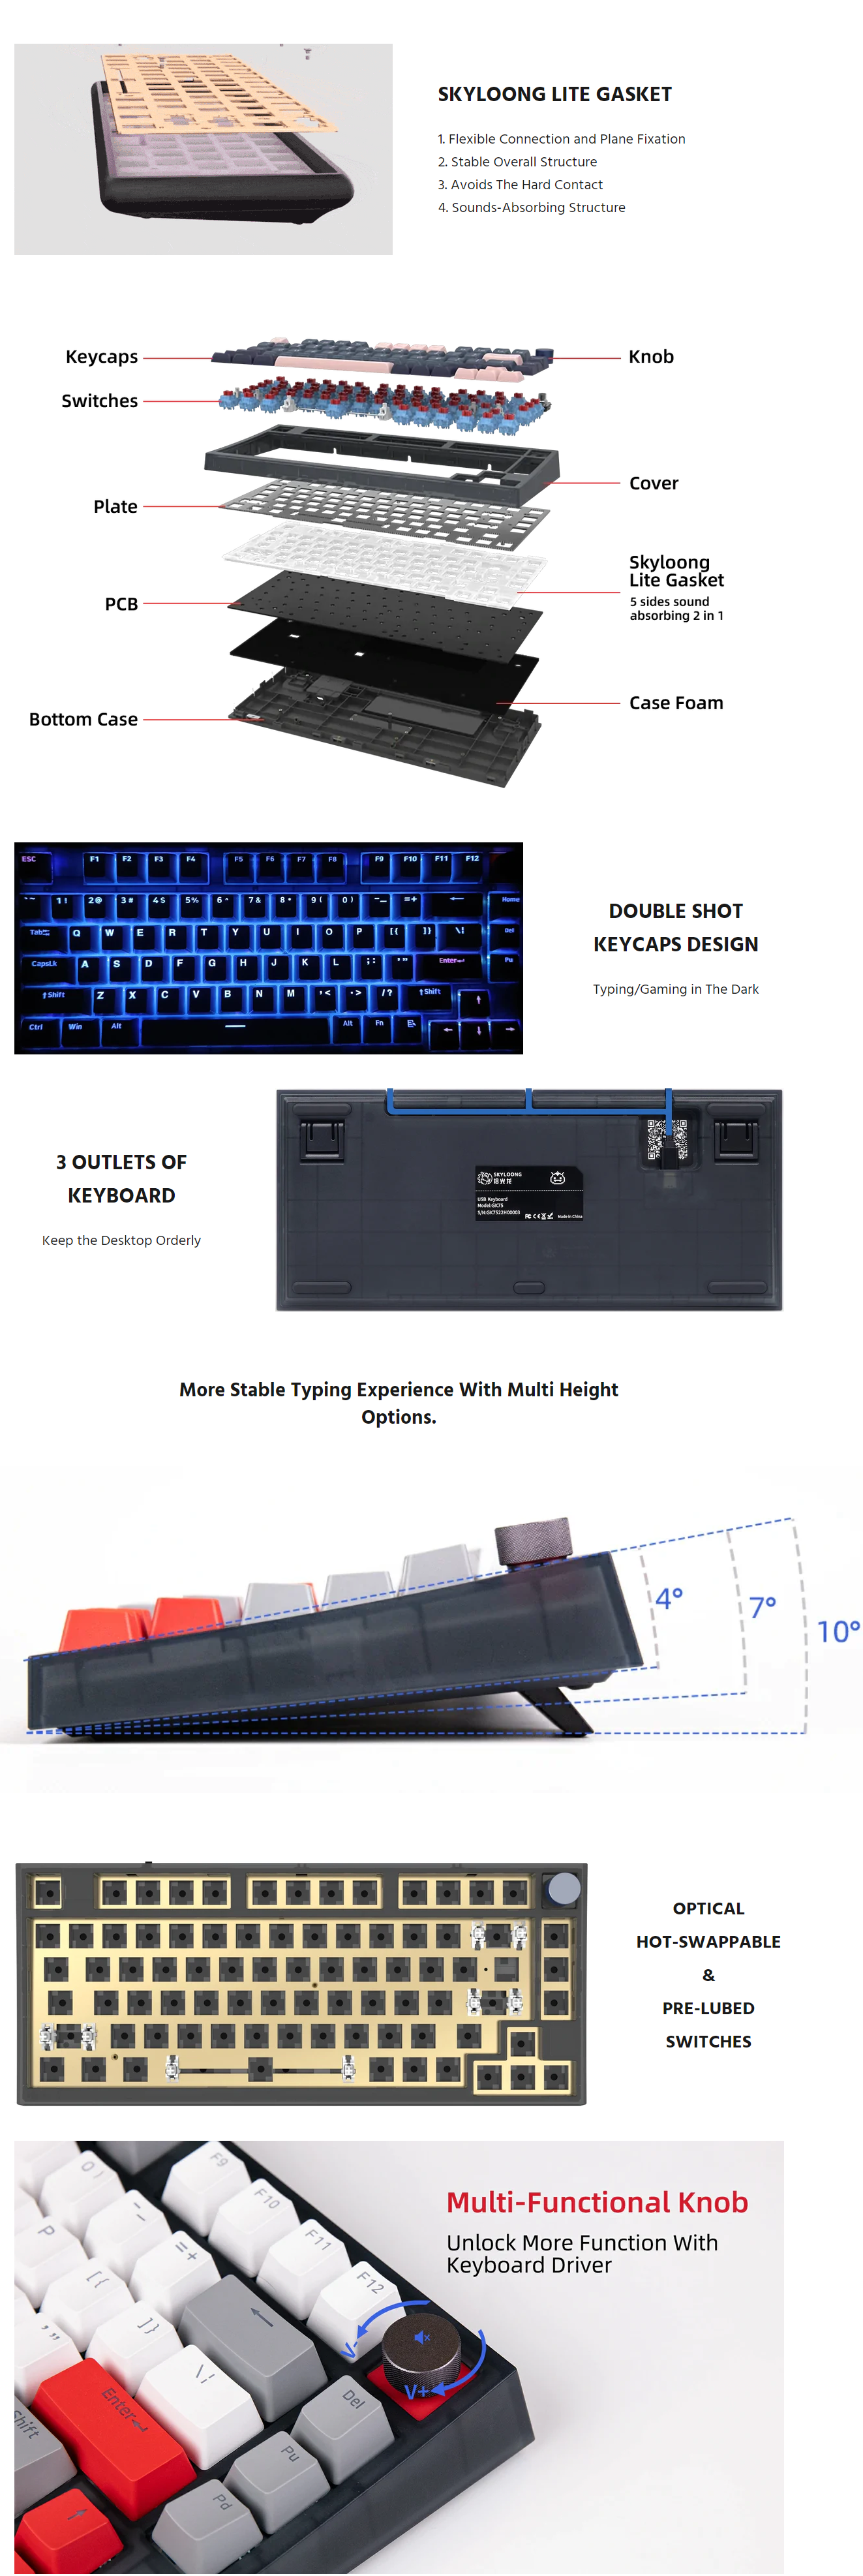 Skyloong GK75 Mechanical Keyboard